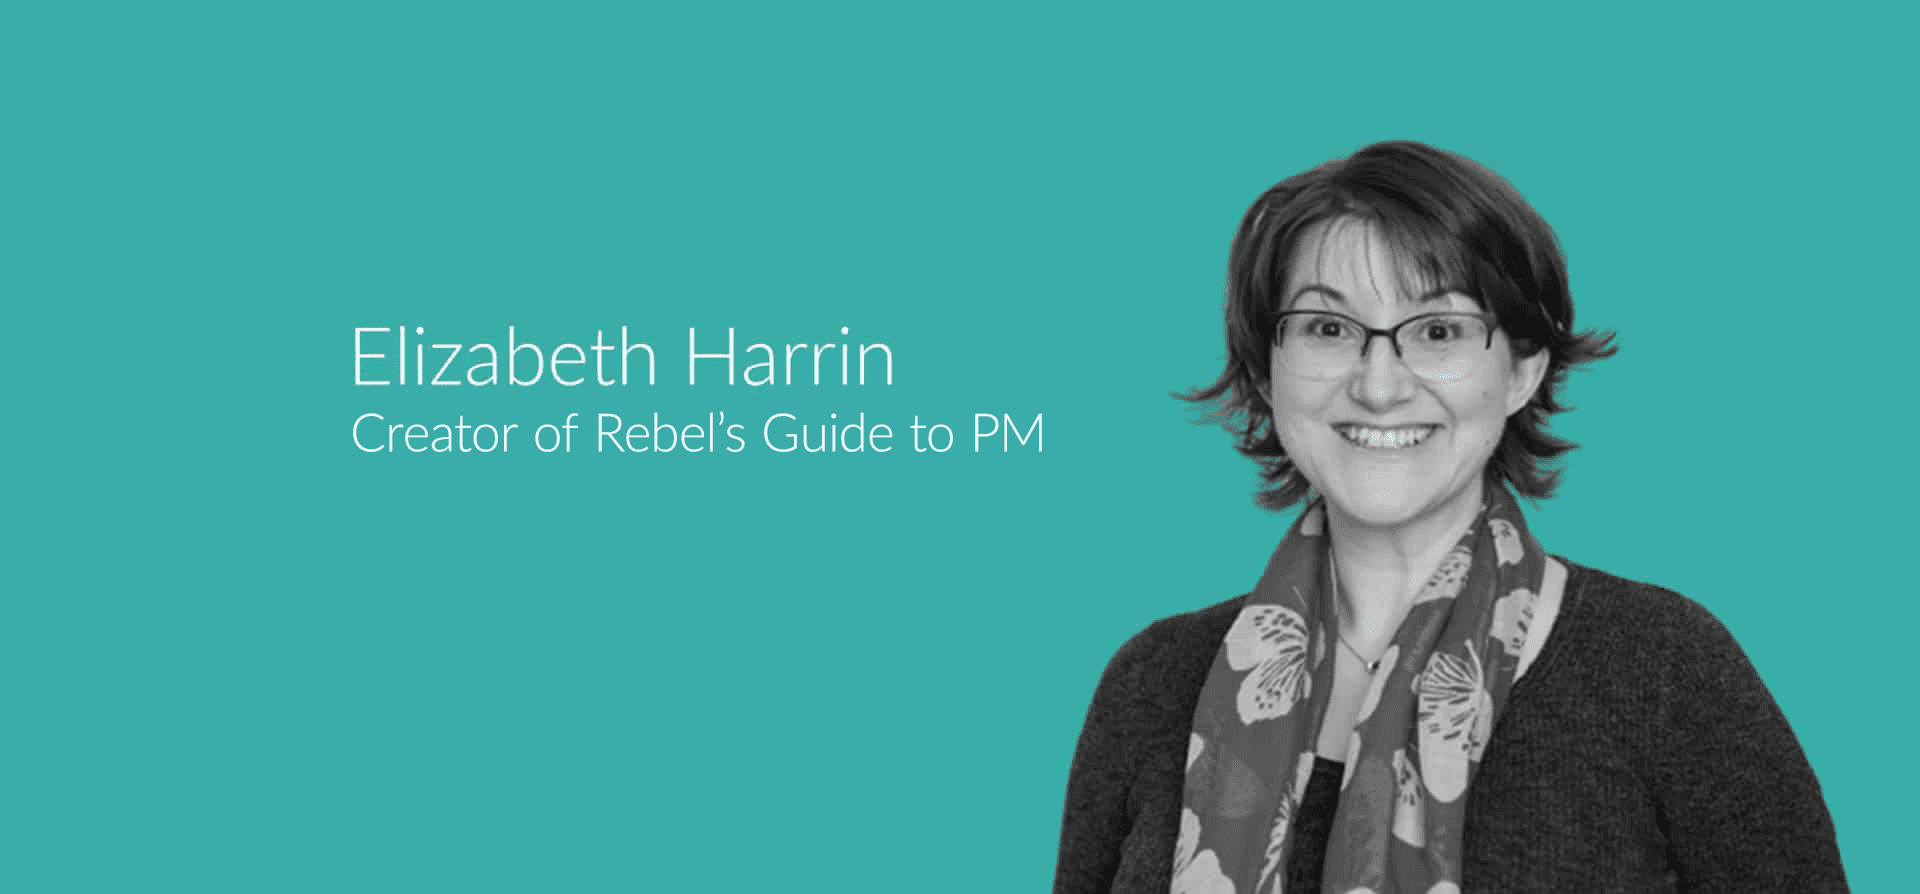 A headshot of Elizabeth Harrin, creator of Rebel's Guide to PM